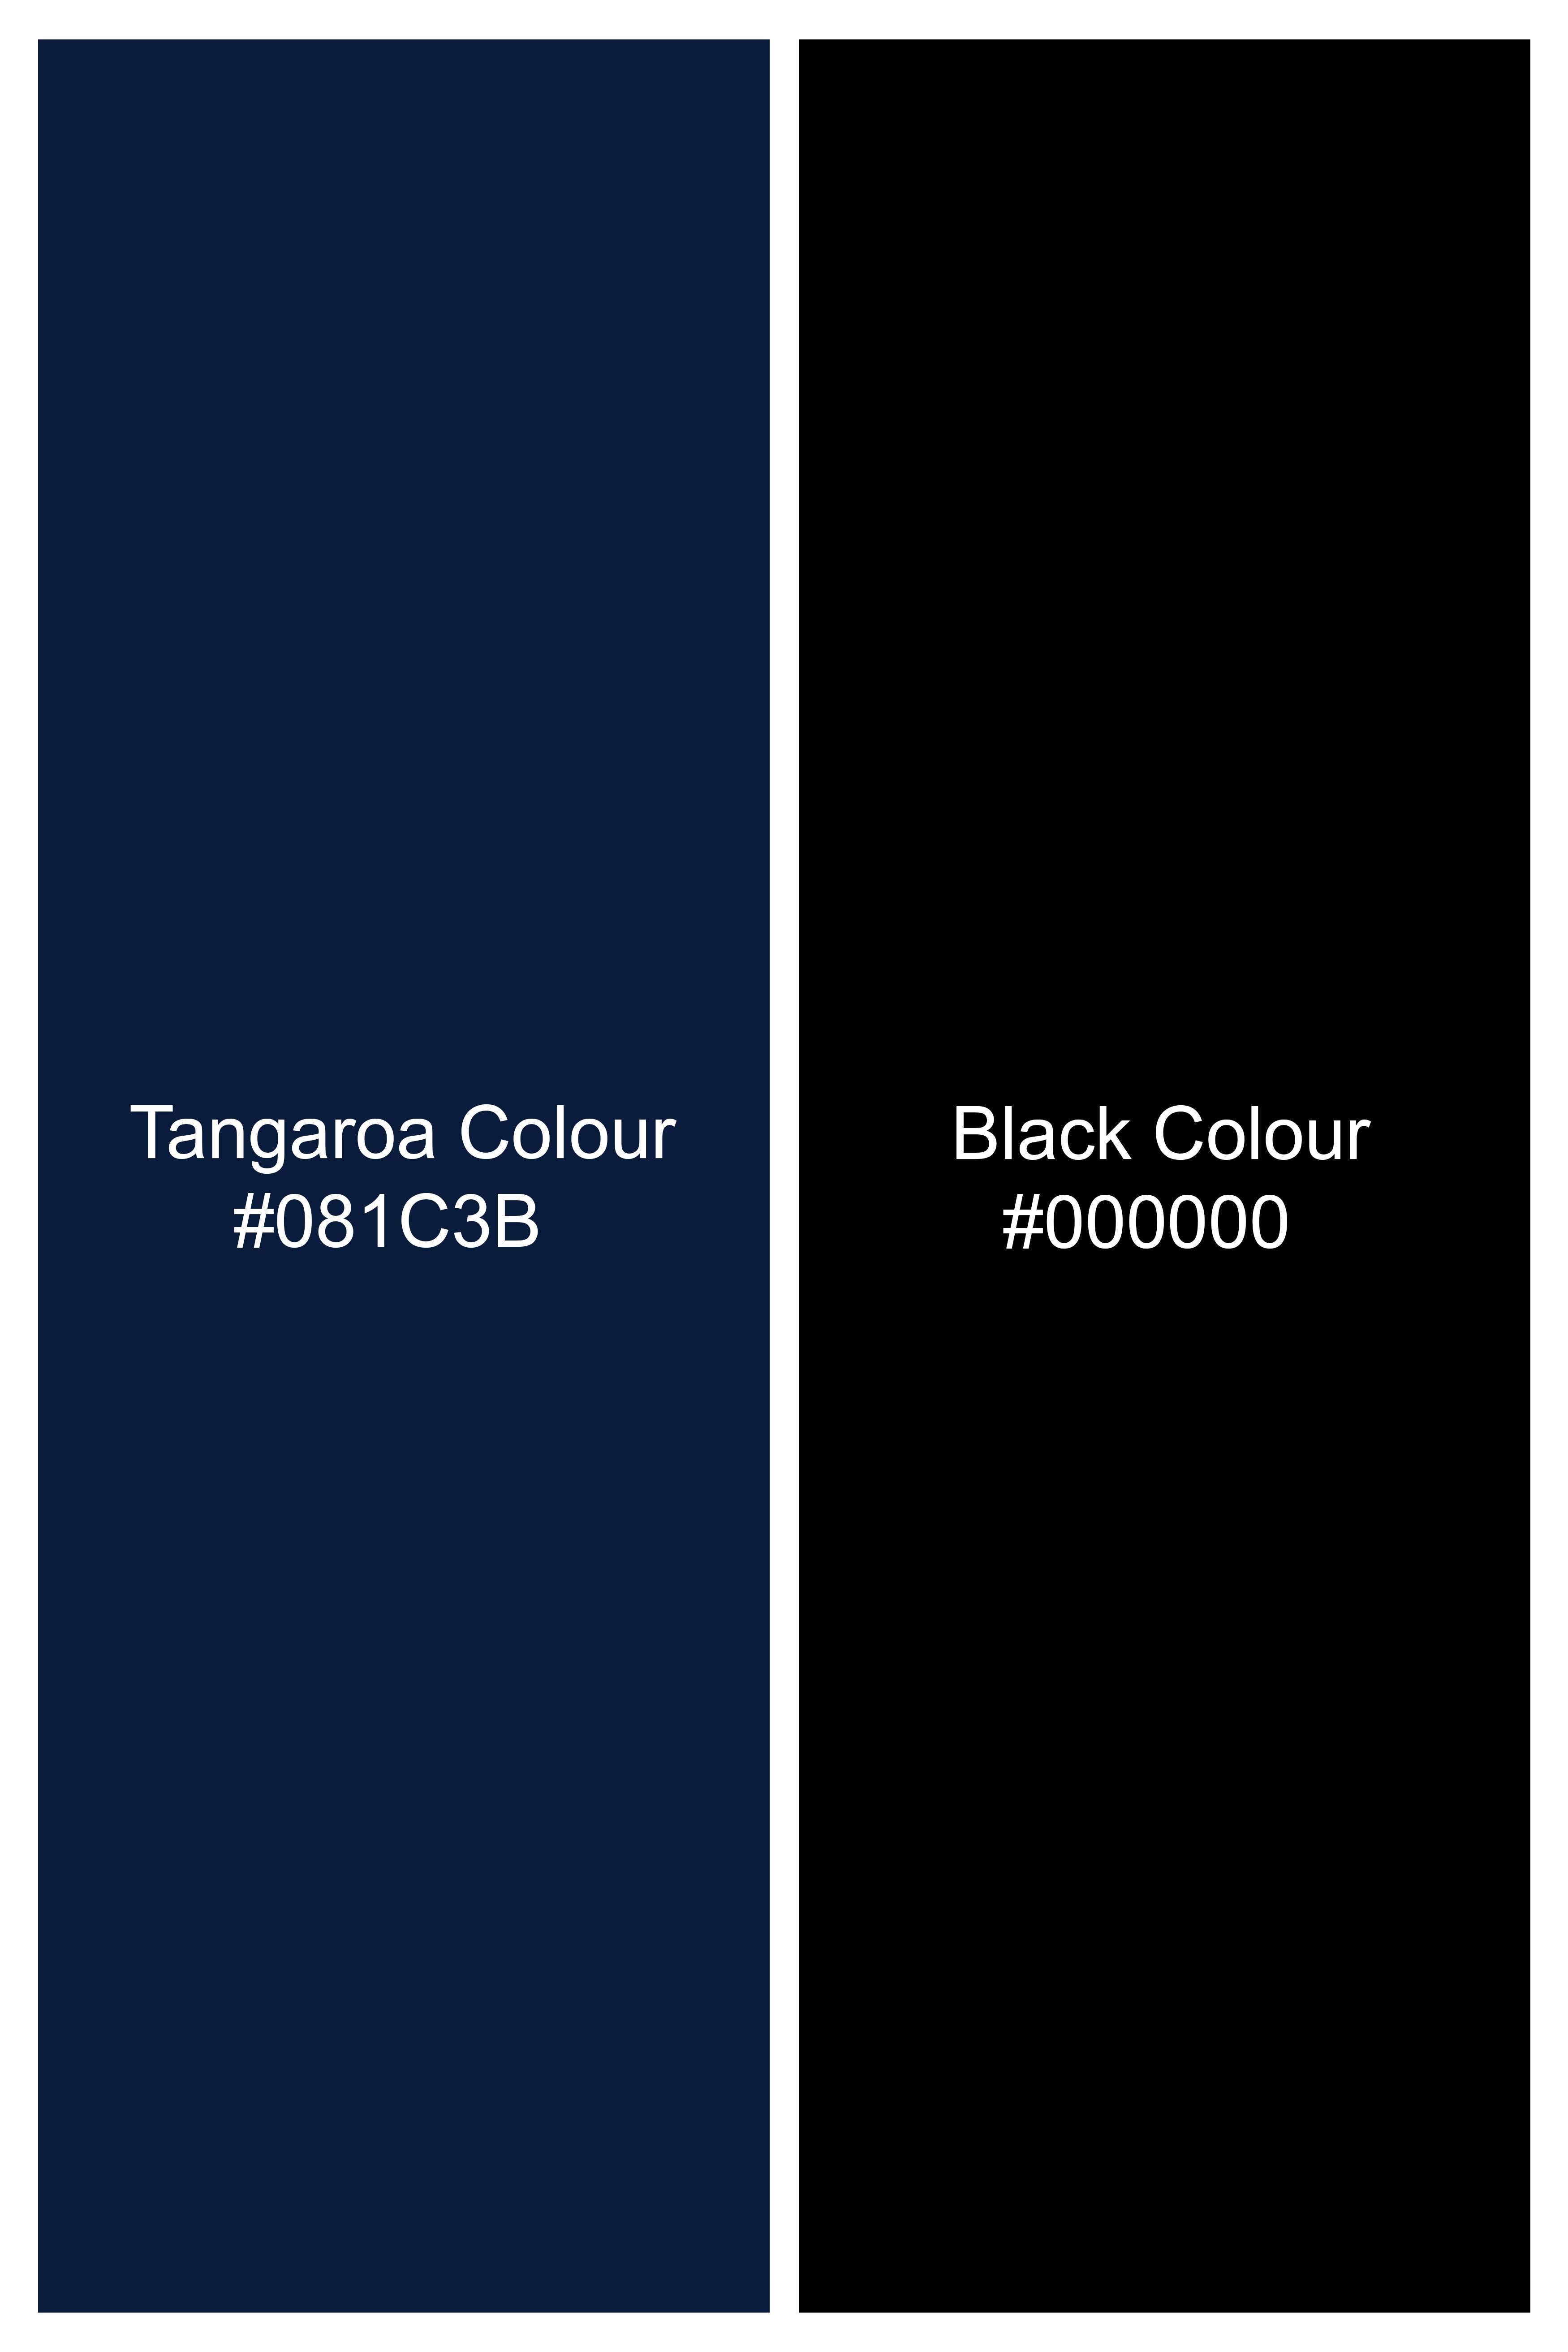 Tangaroa Blue and Subtle Black Checkered Wool Rich Blazer BL2871-SB-36, BL2871-SB-38, BL2871-SB-40, BL2871-SB-42, BL2871-SB-44, BL2871-SB-46, BL2871-SB-48, BL2871-SB-50, BL2871-SB-71, BL2871-SB-54, BL2871-SB-56, BL2871-SB-58, BL2871-SB-60